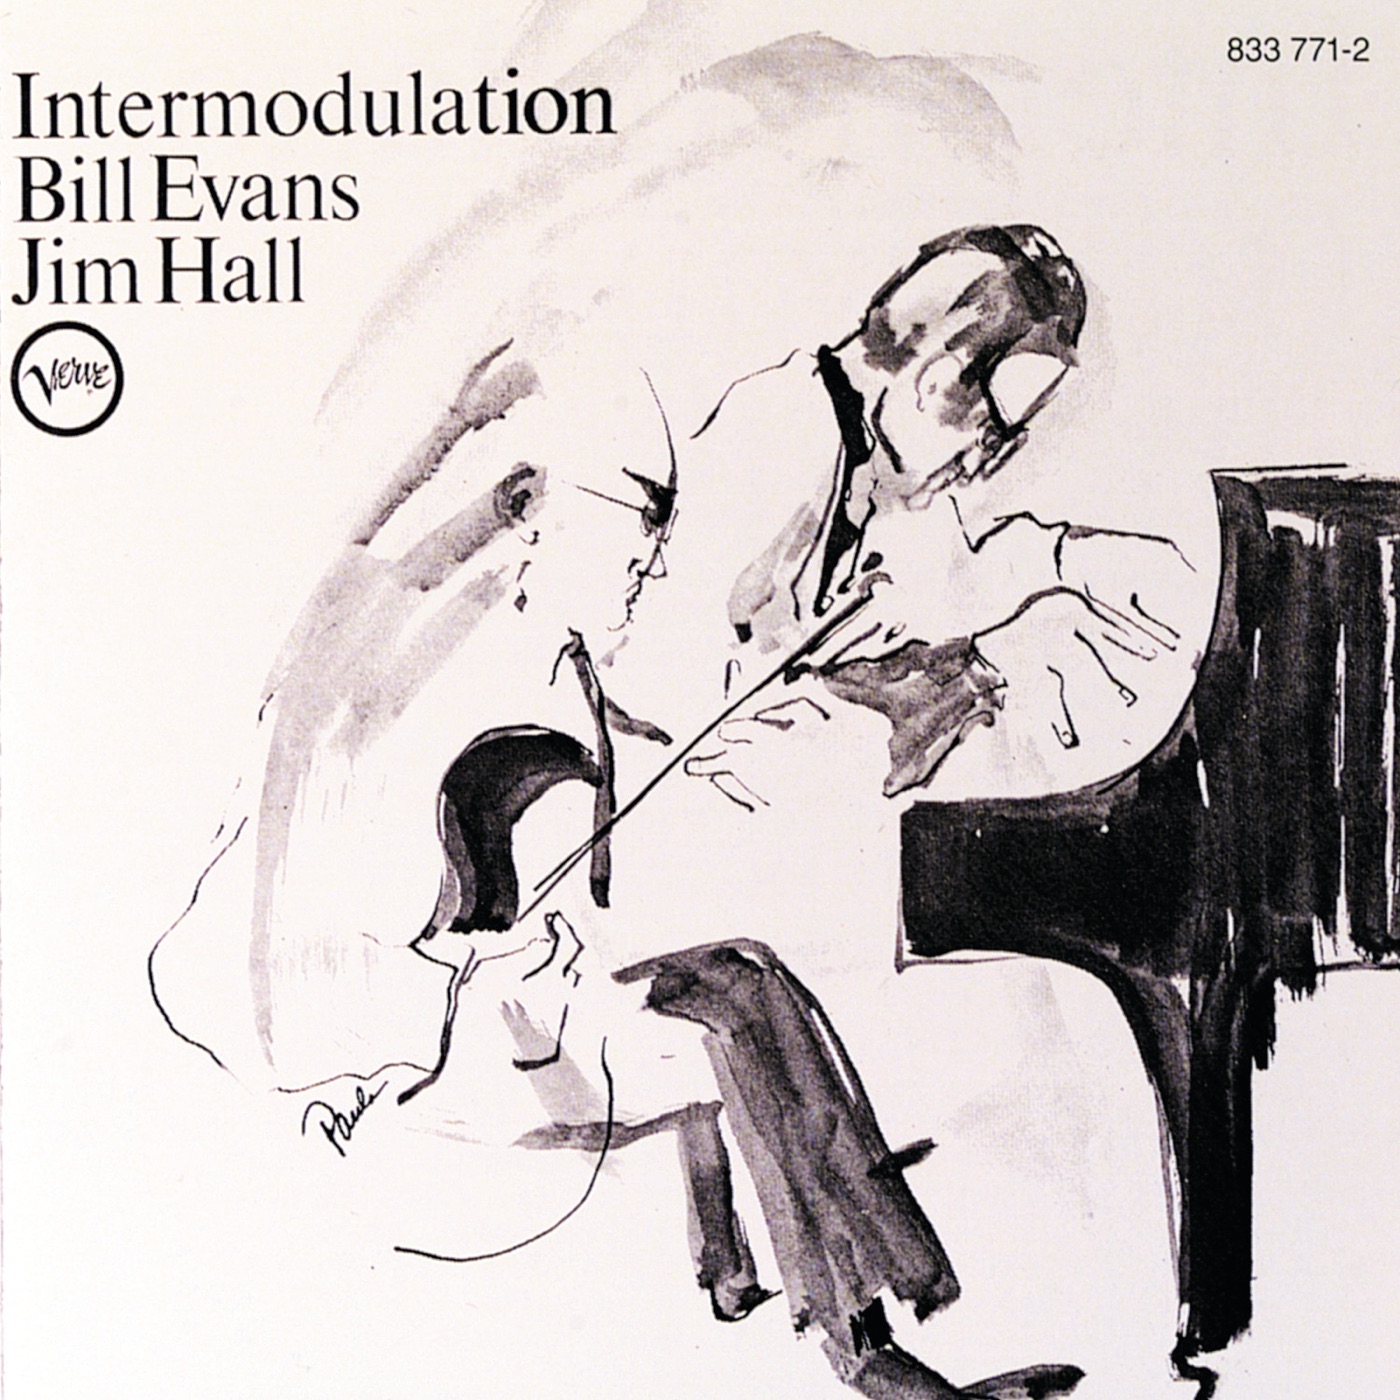 Intermodulation by Bill Evans, Jim Hall